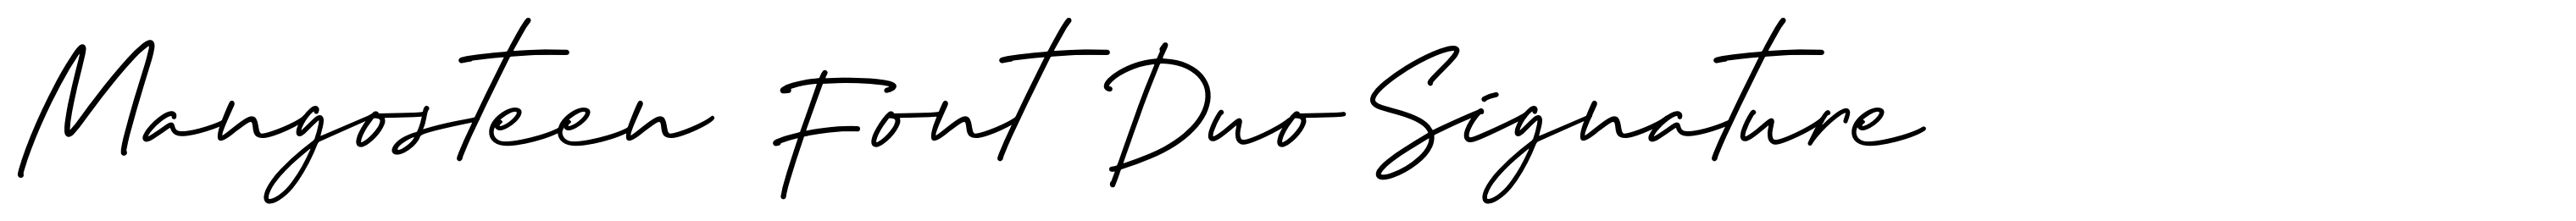 Mangosteen Font Duo Signature